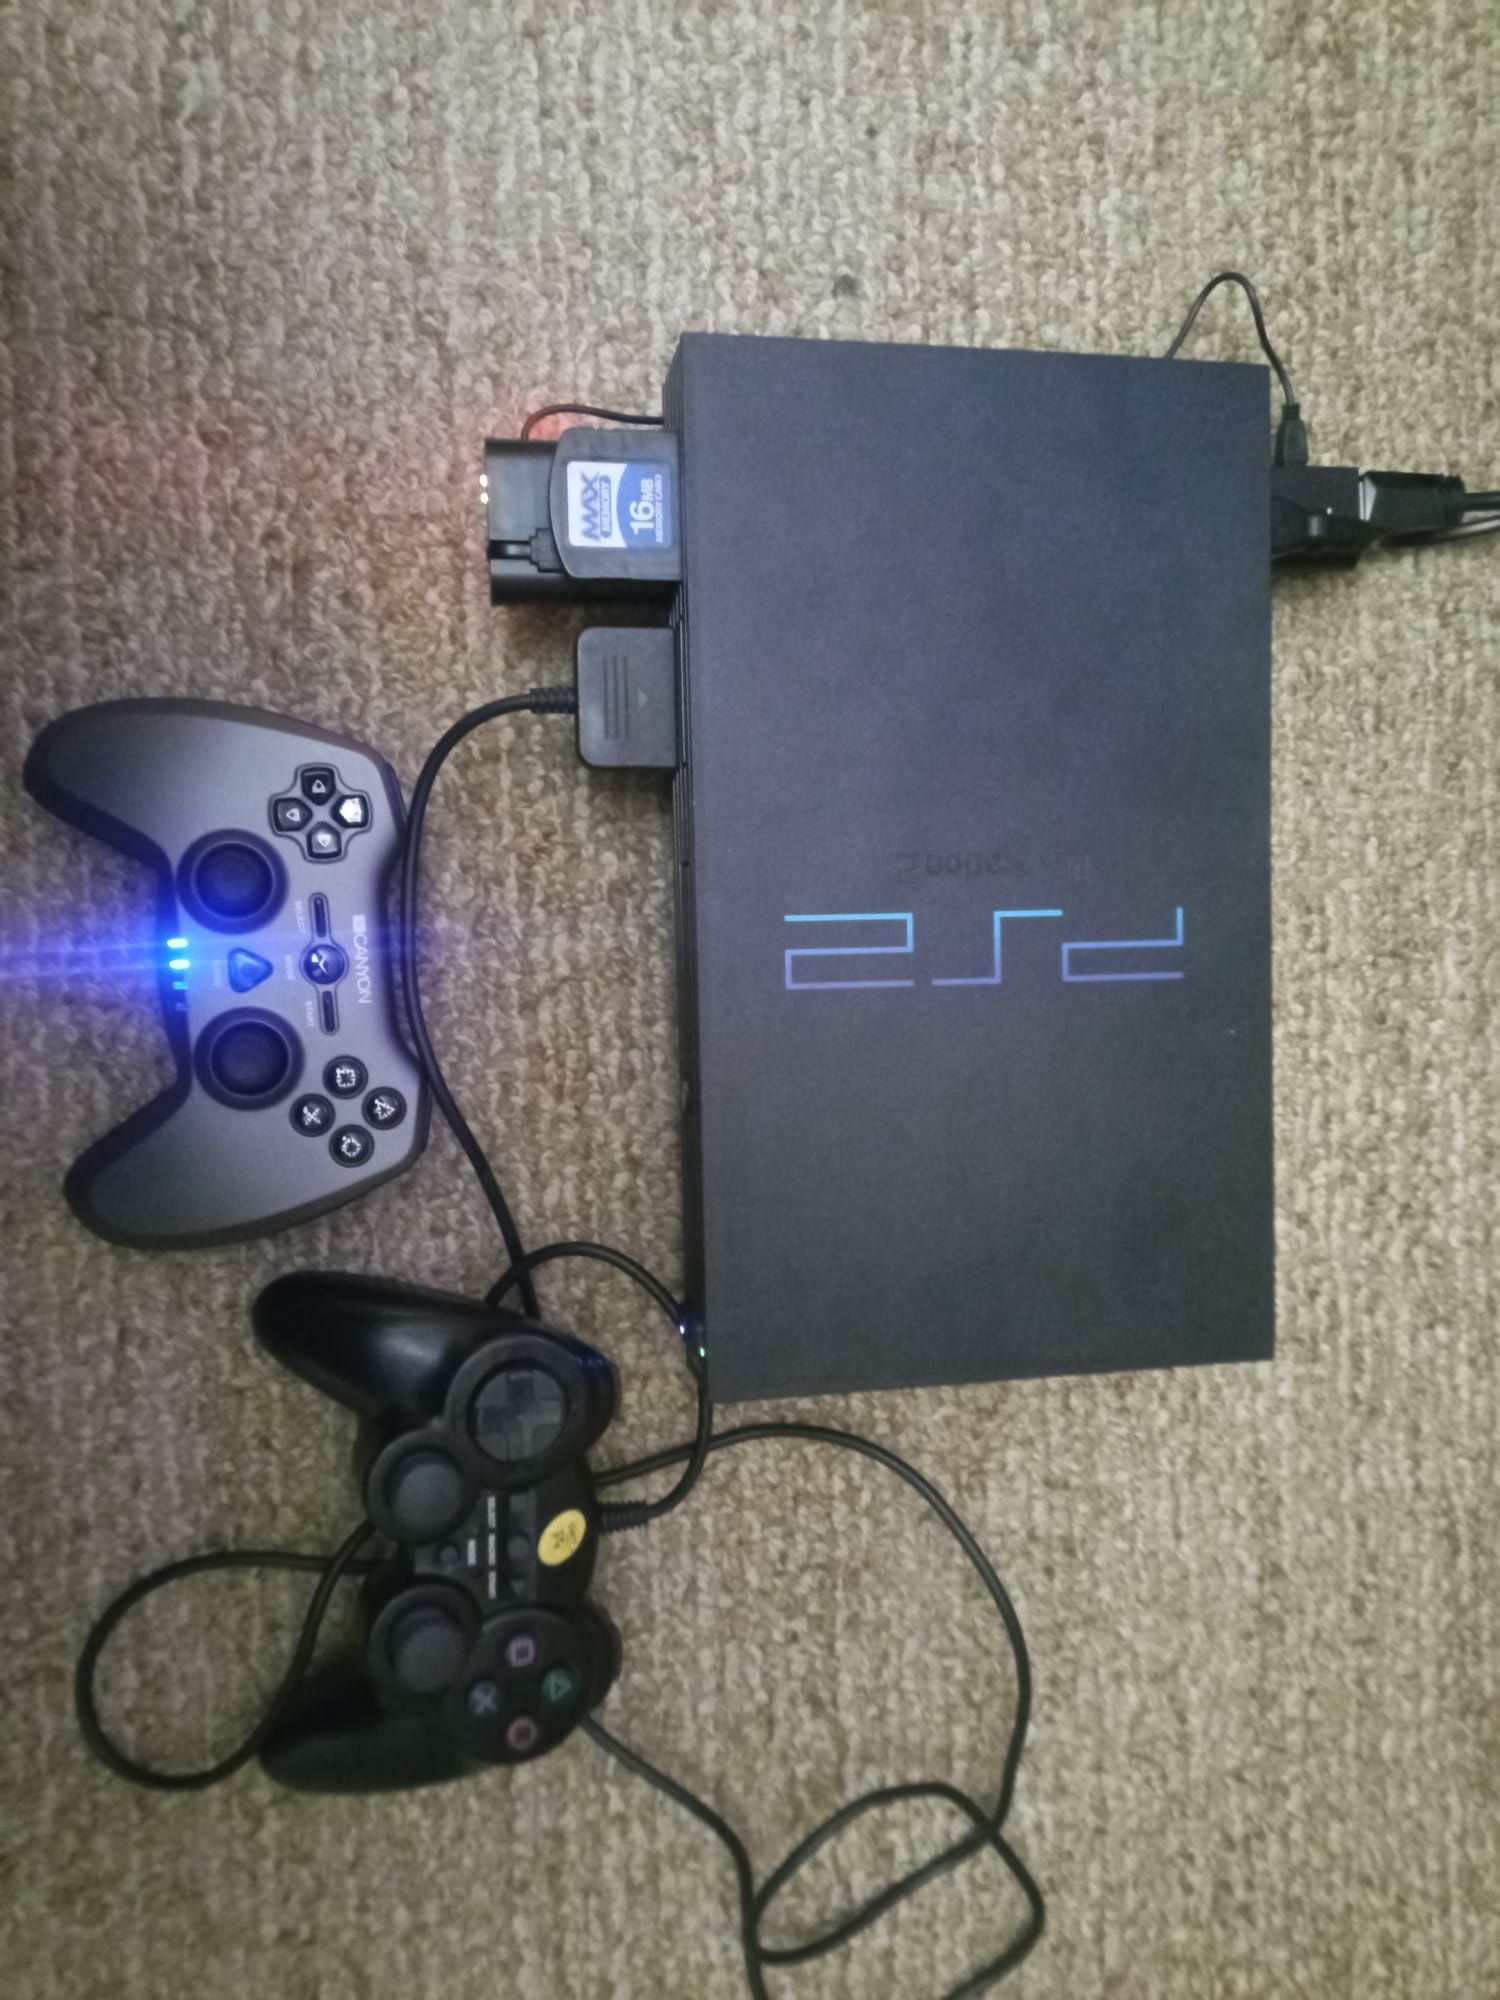 PlayStation 2 PS 2 Model 50004 Black